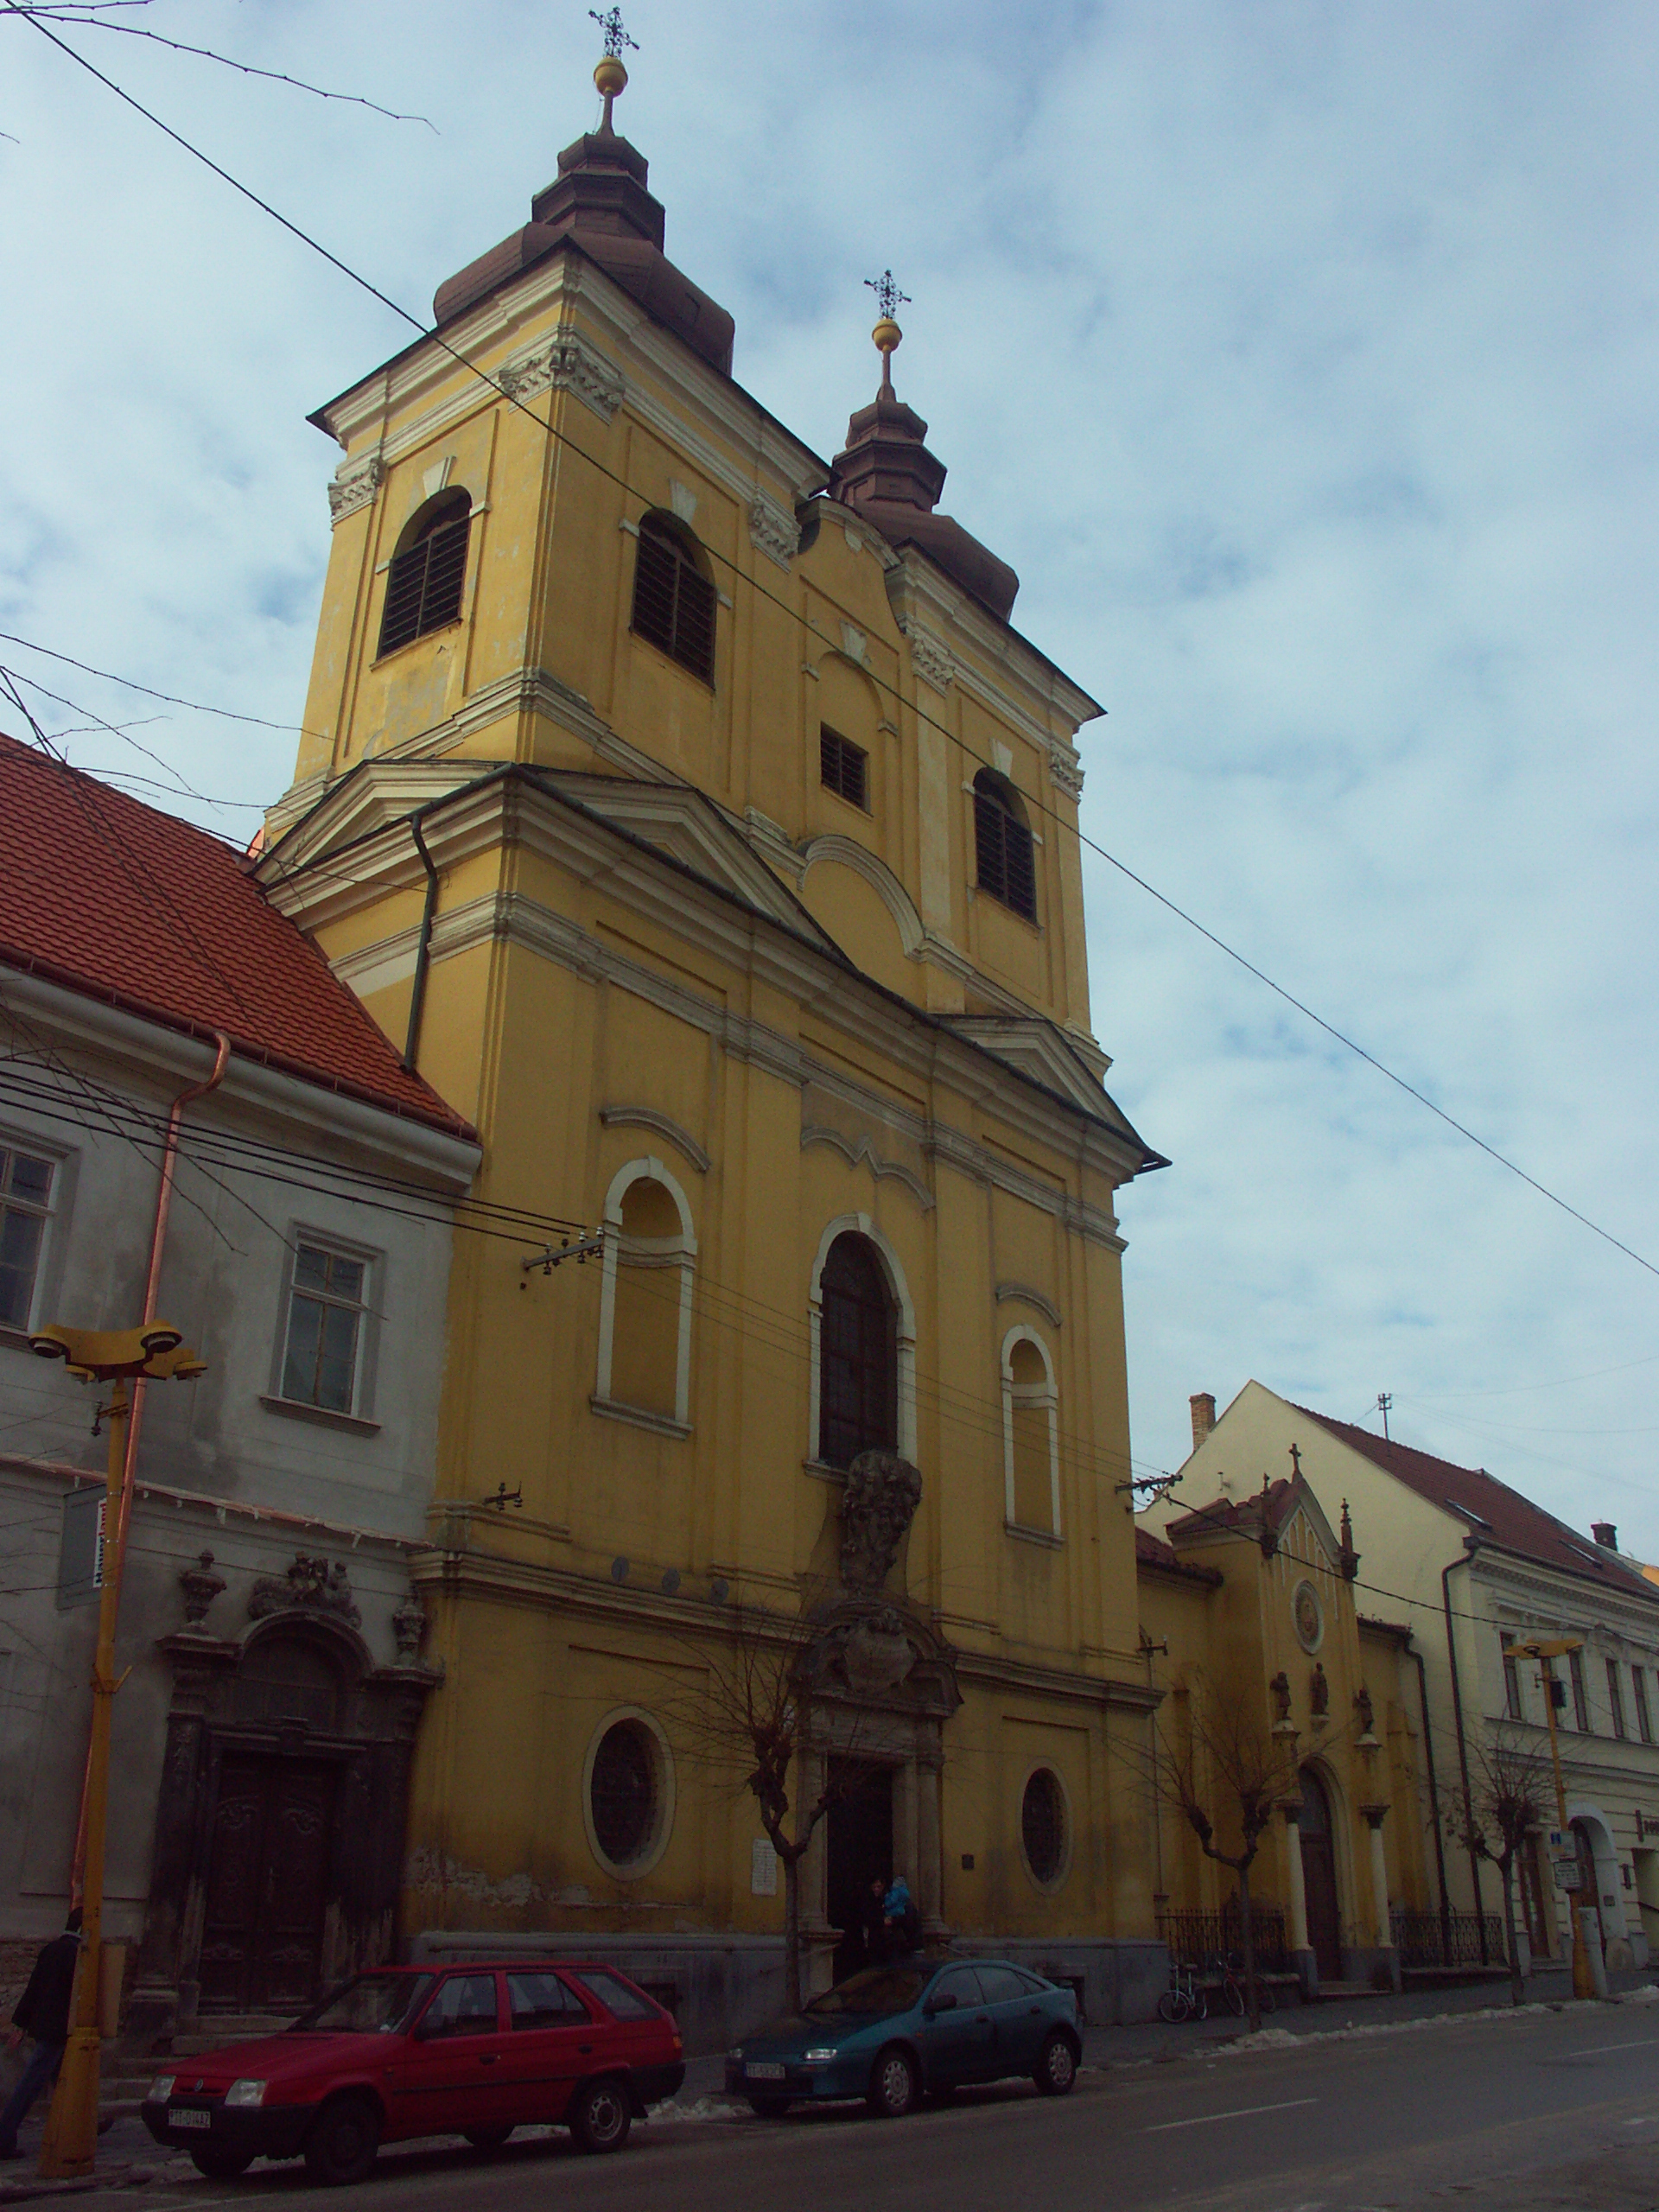 File:Slovakia-Trnava-Kostol jezuitov.JPG - Wikimedia Commons